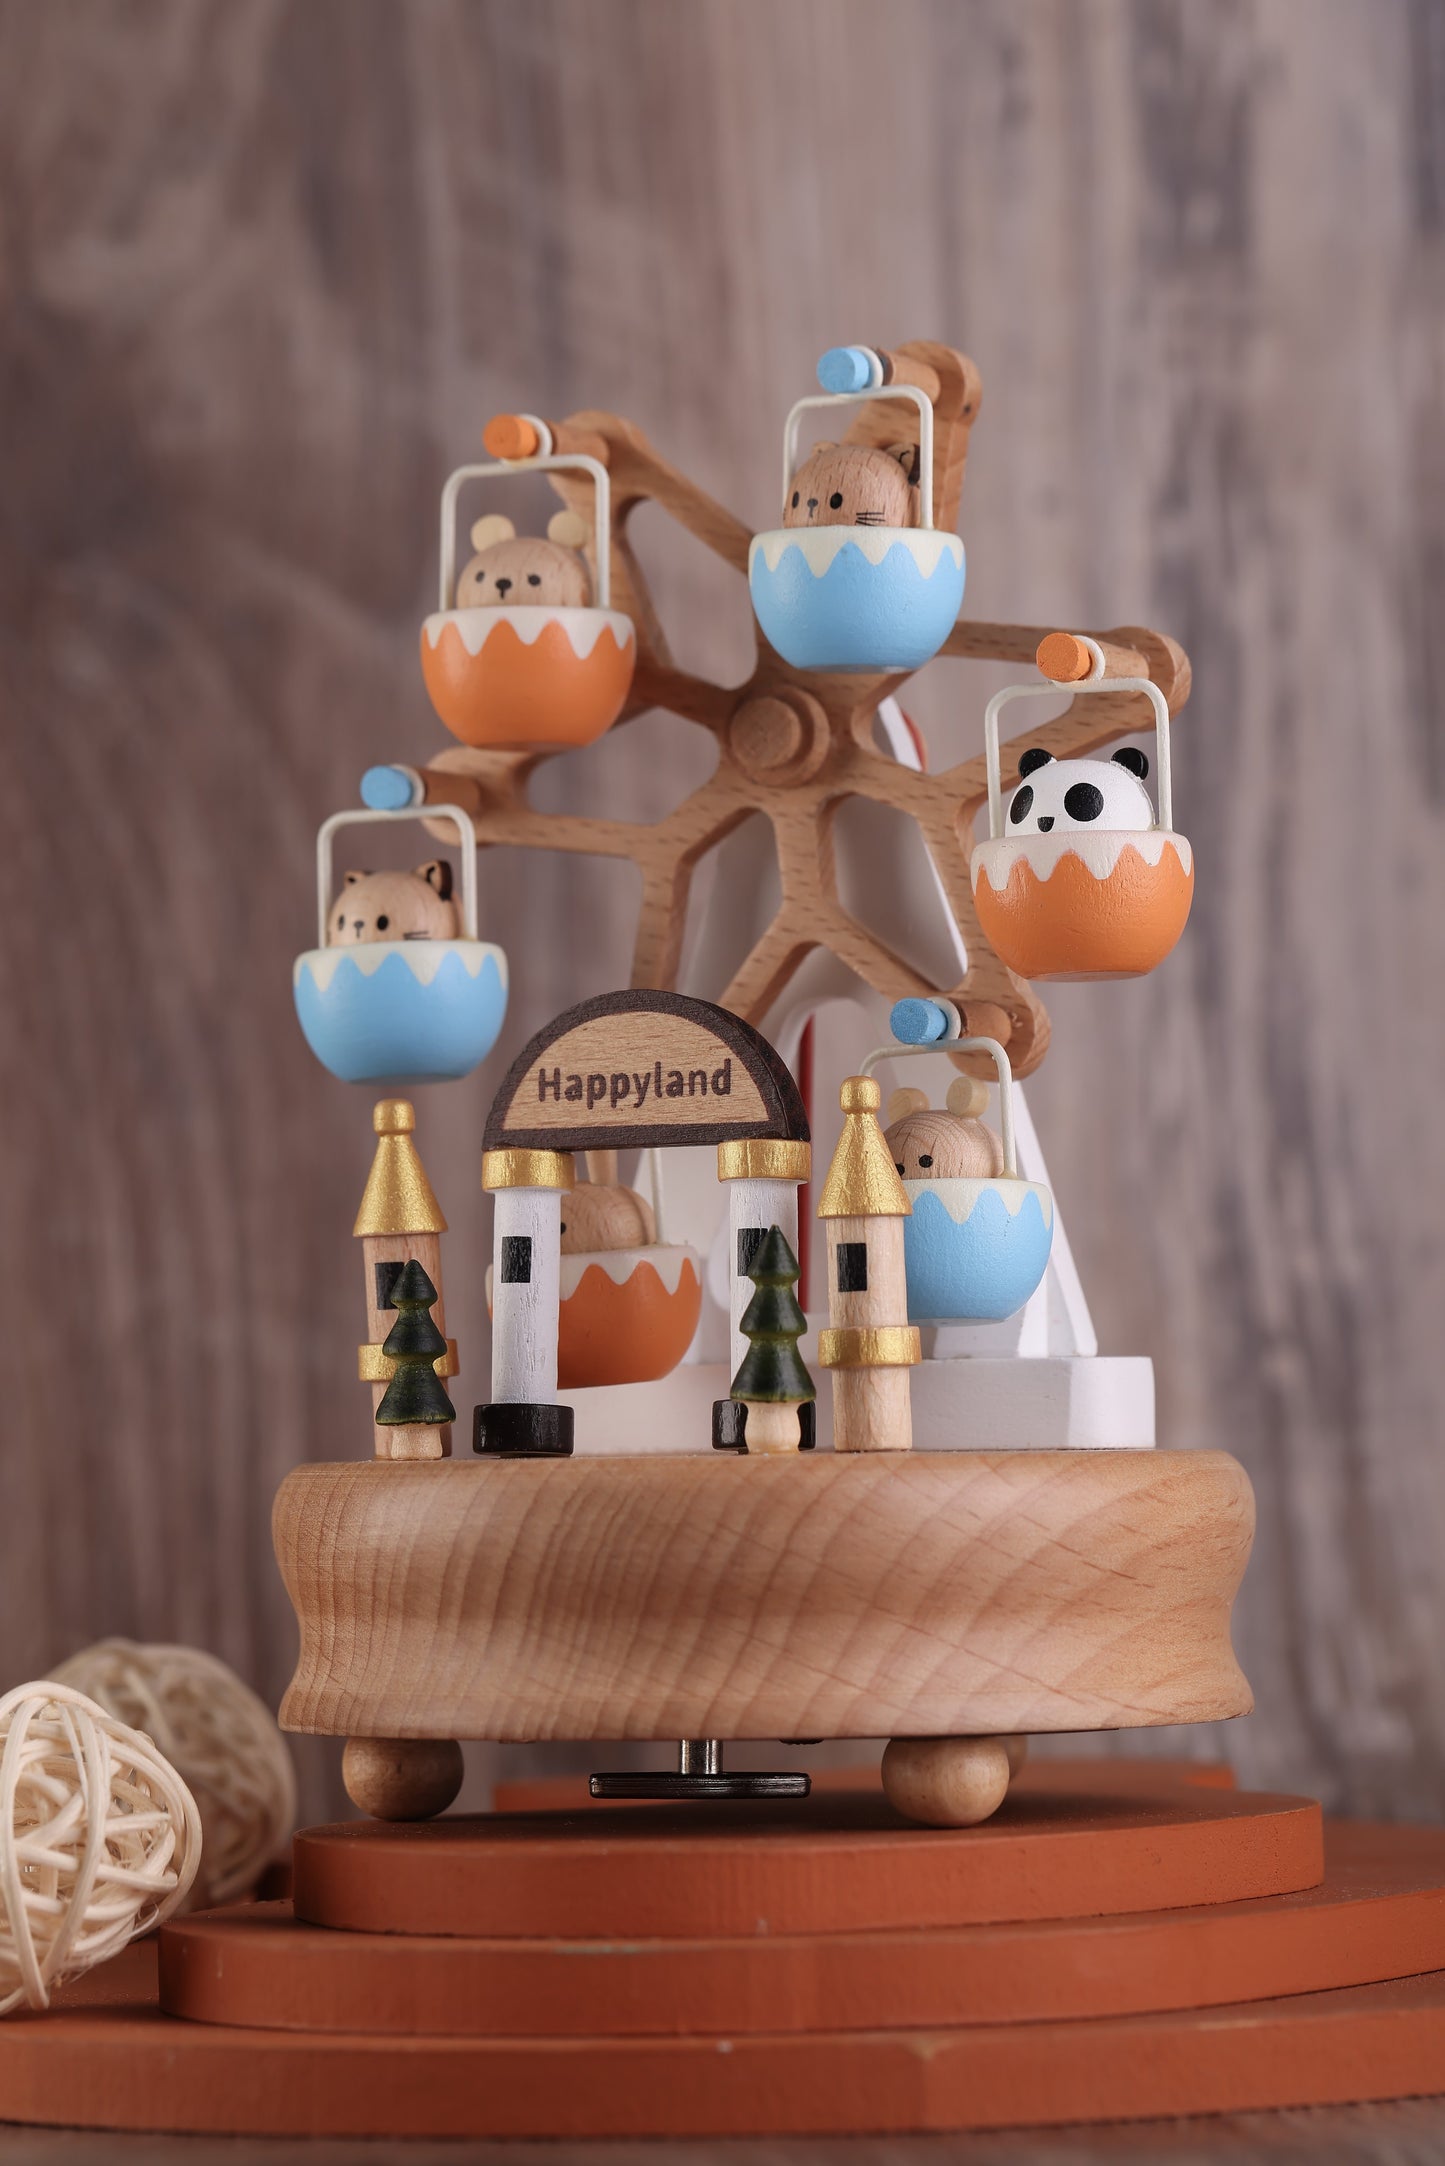 Wooden Music Box - Kitty cat & friends Ferris wheel - Love Story Tune